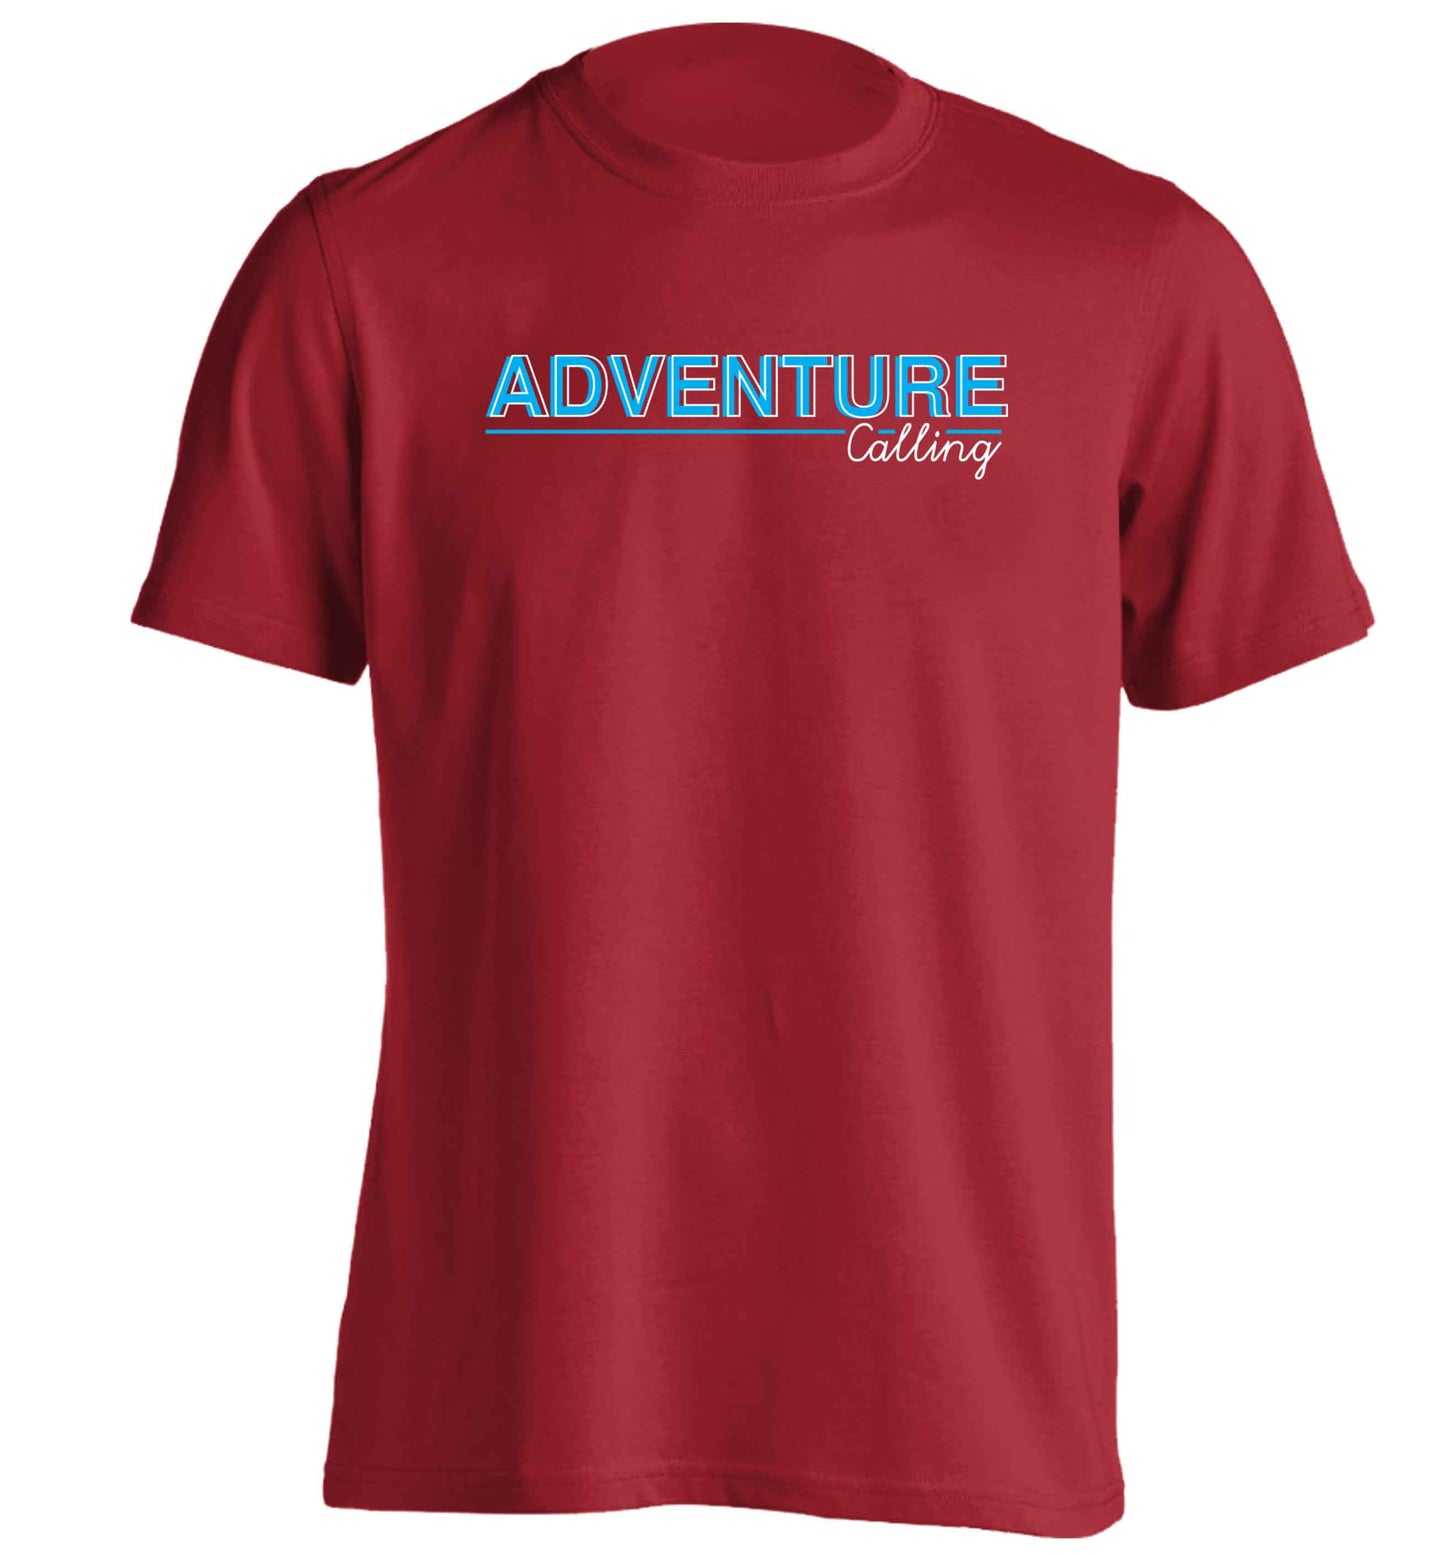 Adventure calling adults unisex red Tshirt 2XL